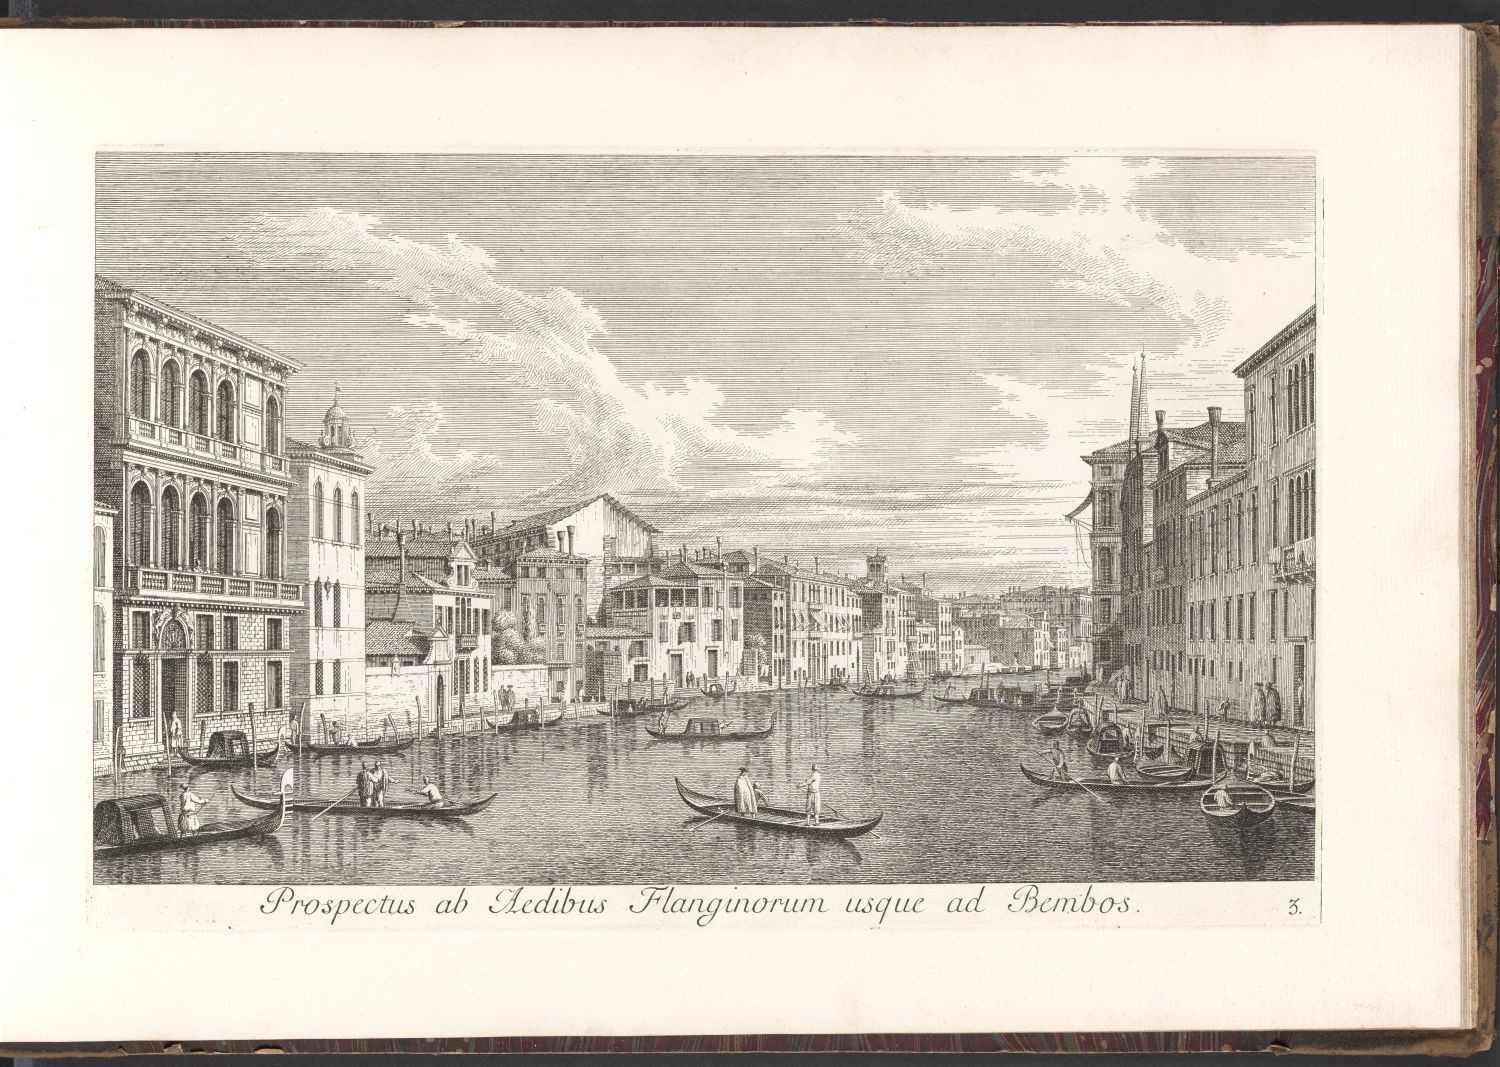 Venedig, 3. Prospectus ad Aedibus Flanginorum usque ad Bembos. (Stiftung Händelhaus, Halle CC BY-NC-SA)